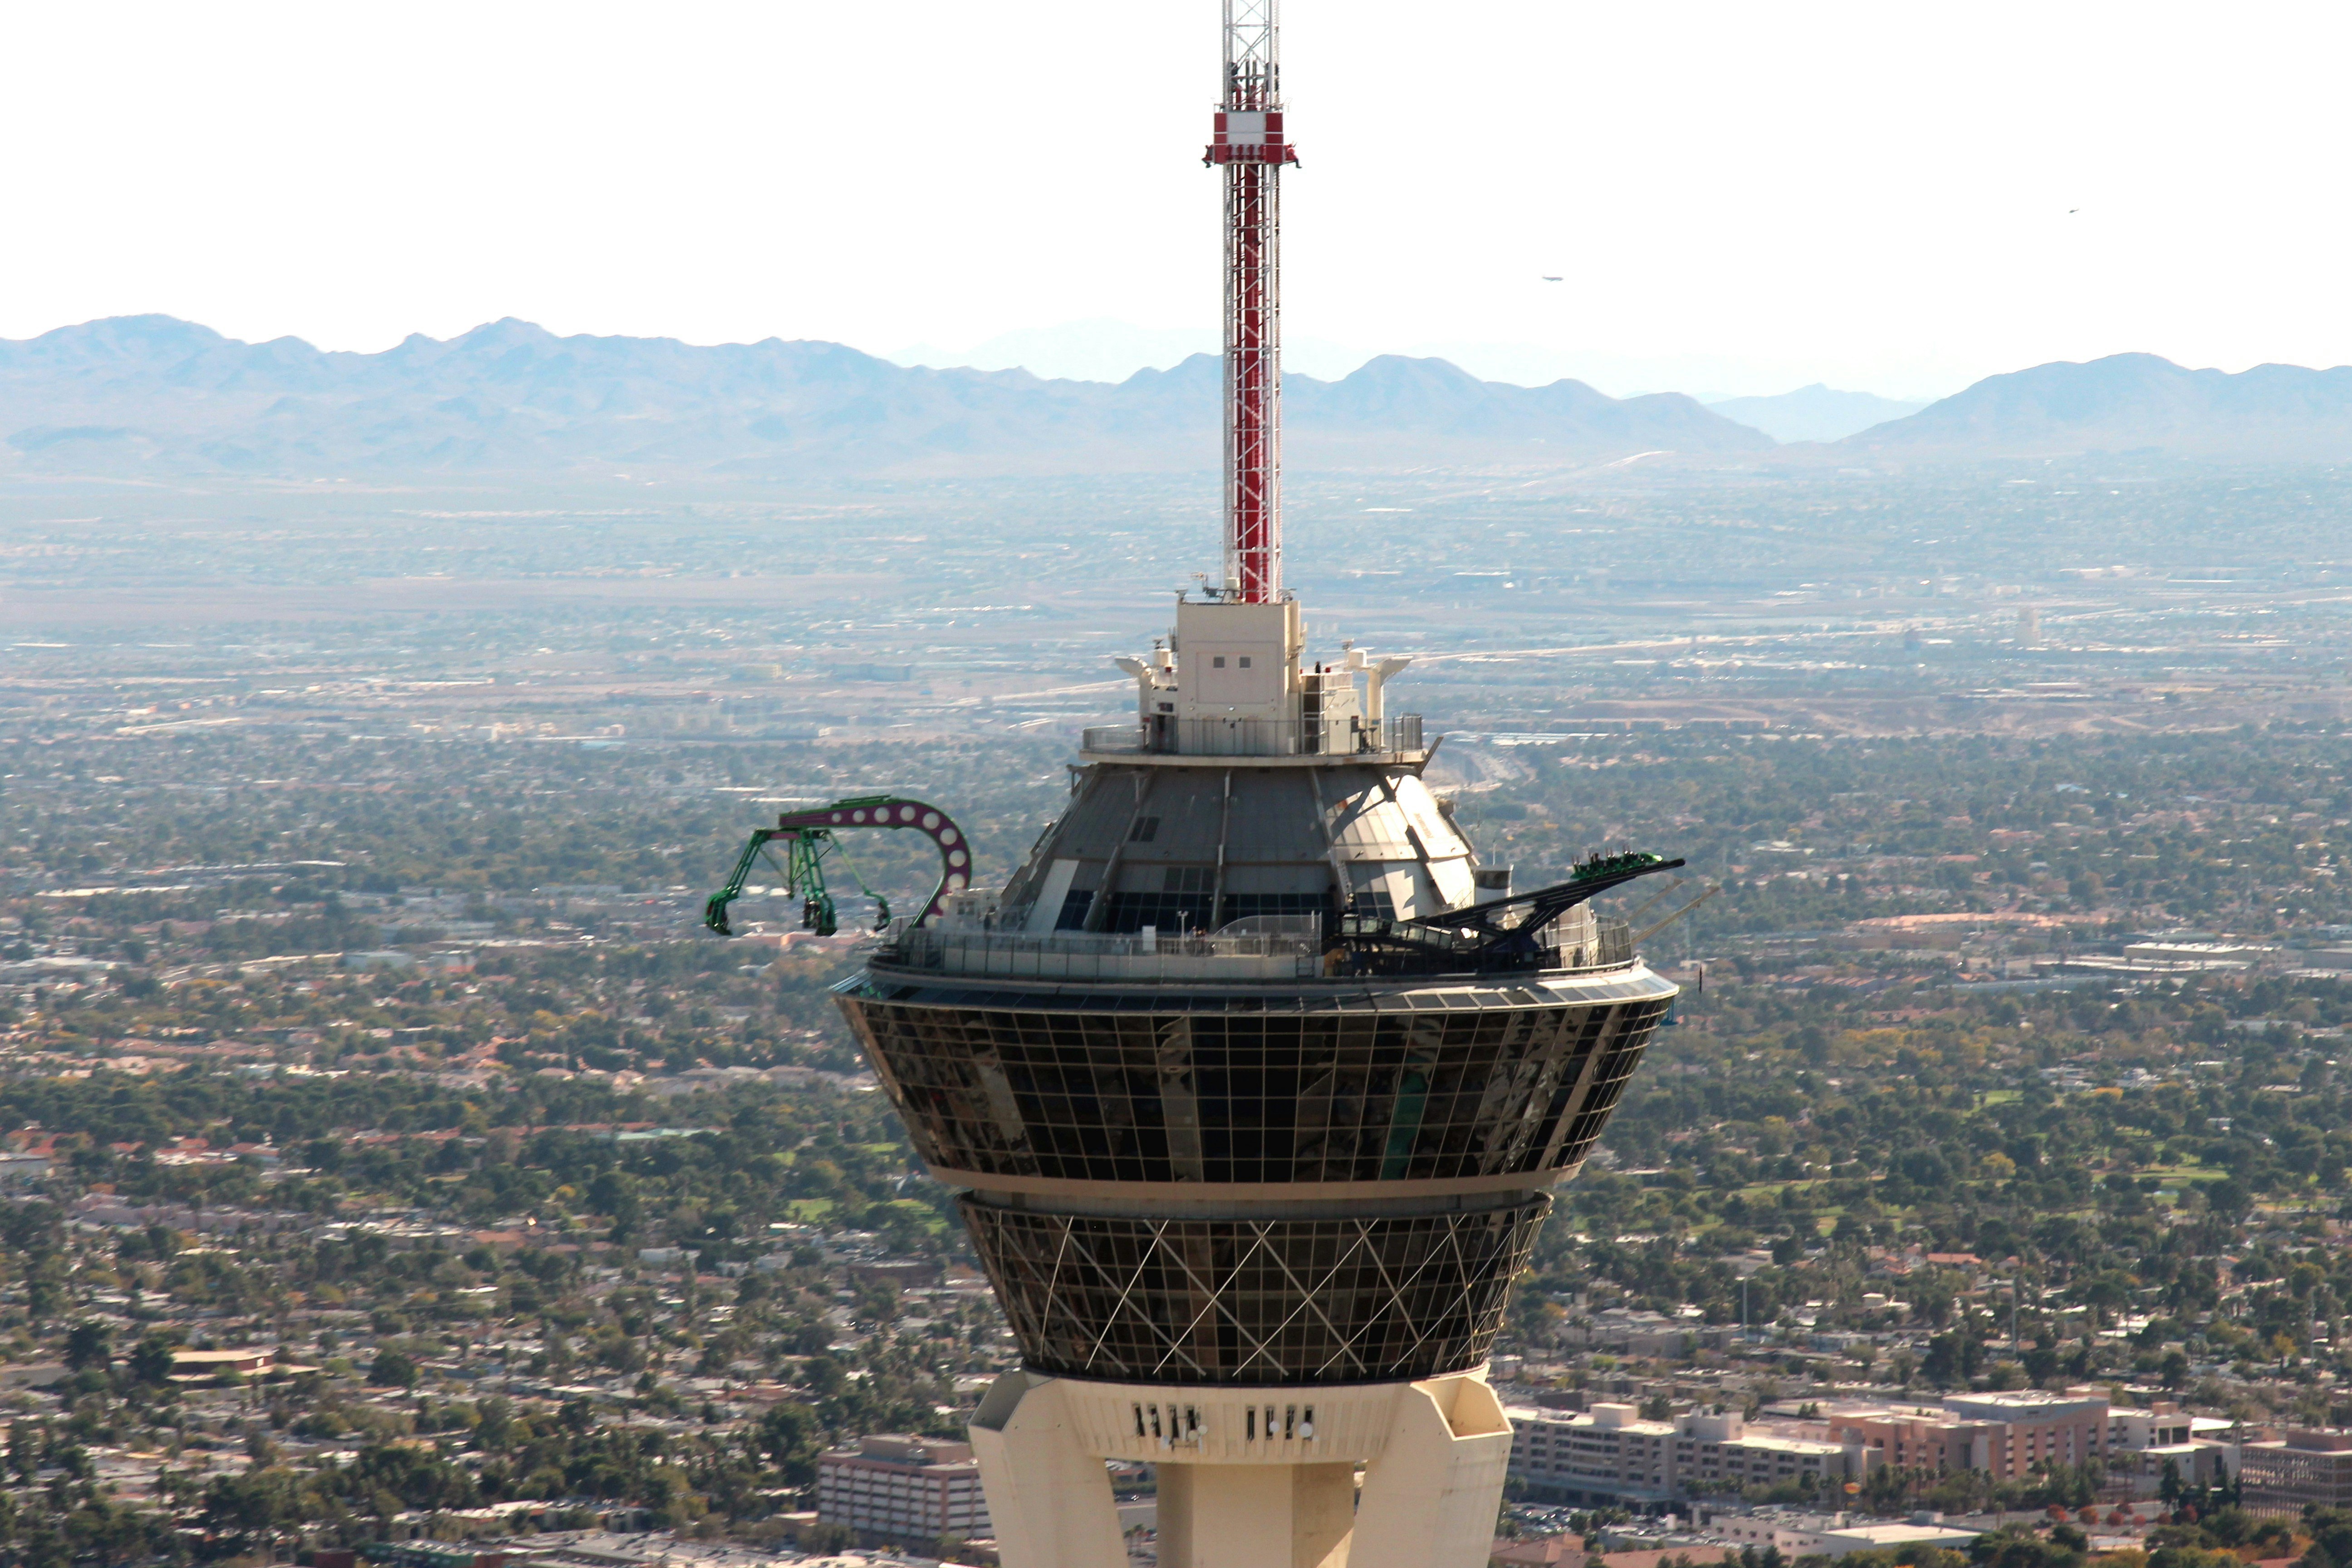 Attractions - The STRAT Hotel, Casino & Tower - Las Vegas, NV